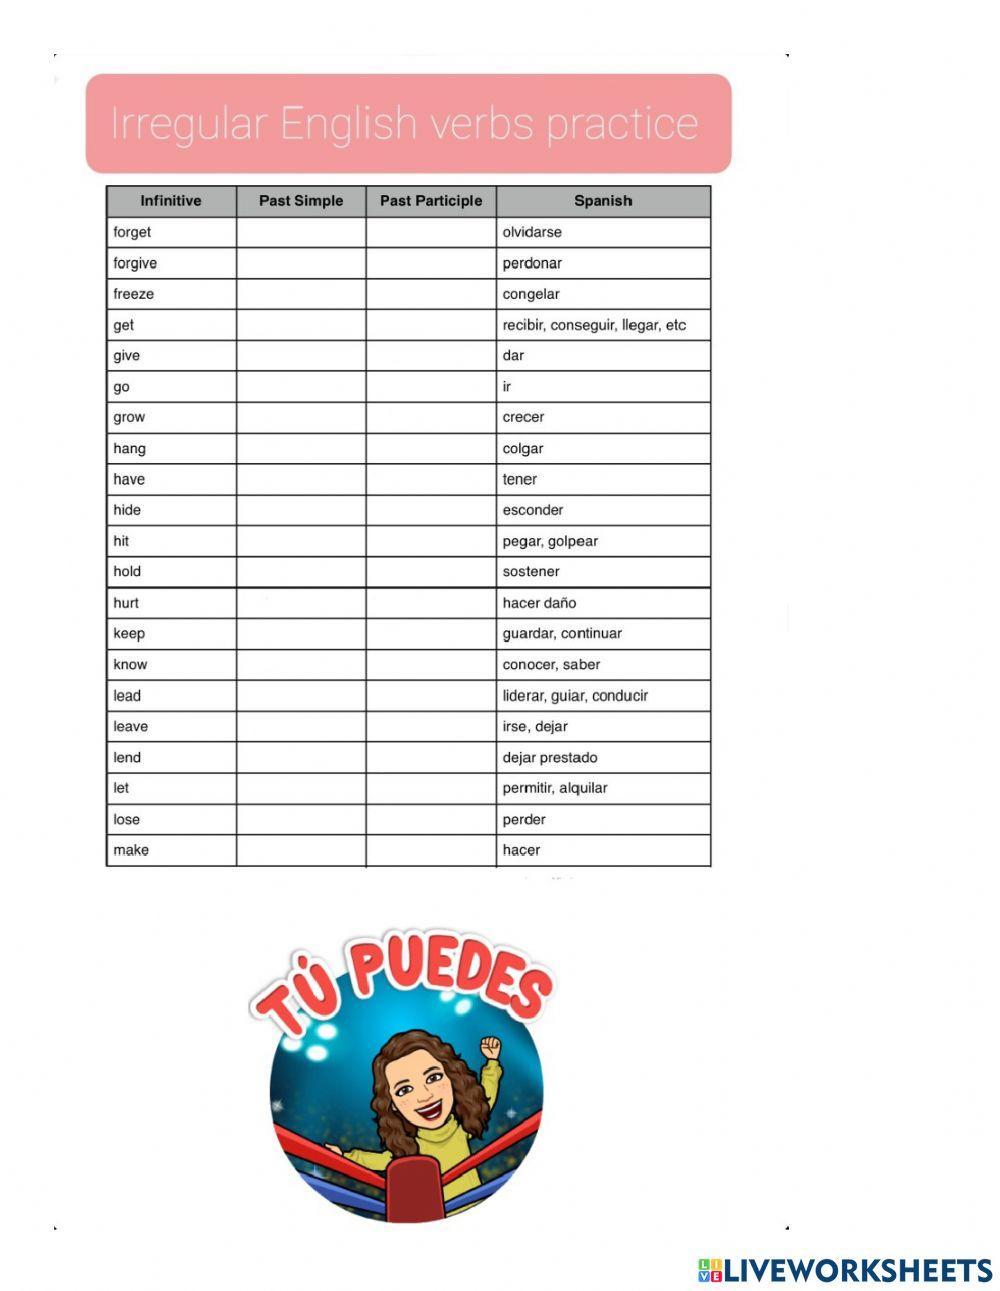 21 irregular verbs in alphabetical order from 2nd list